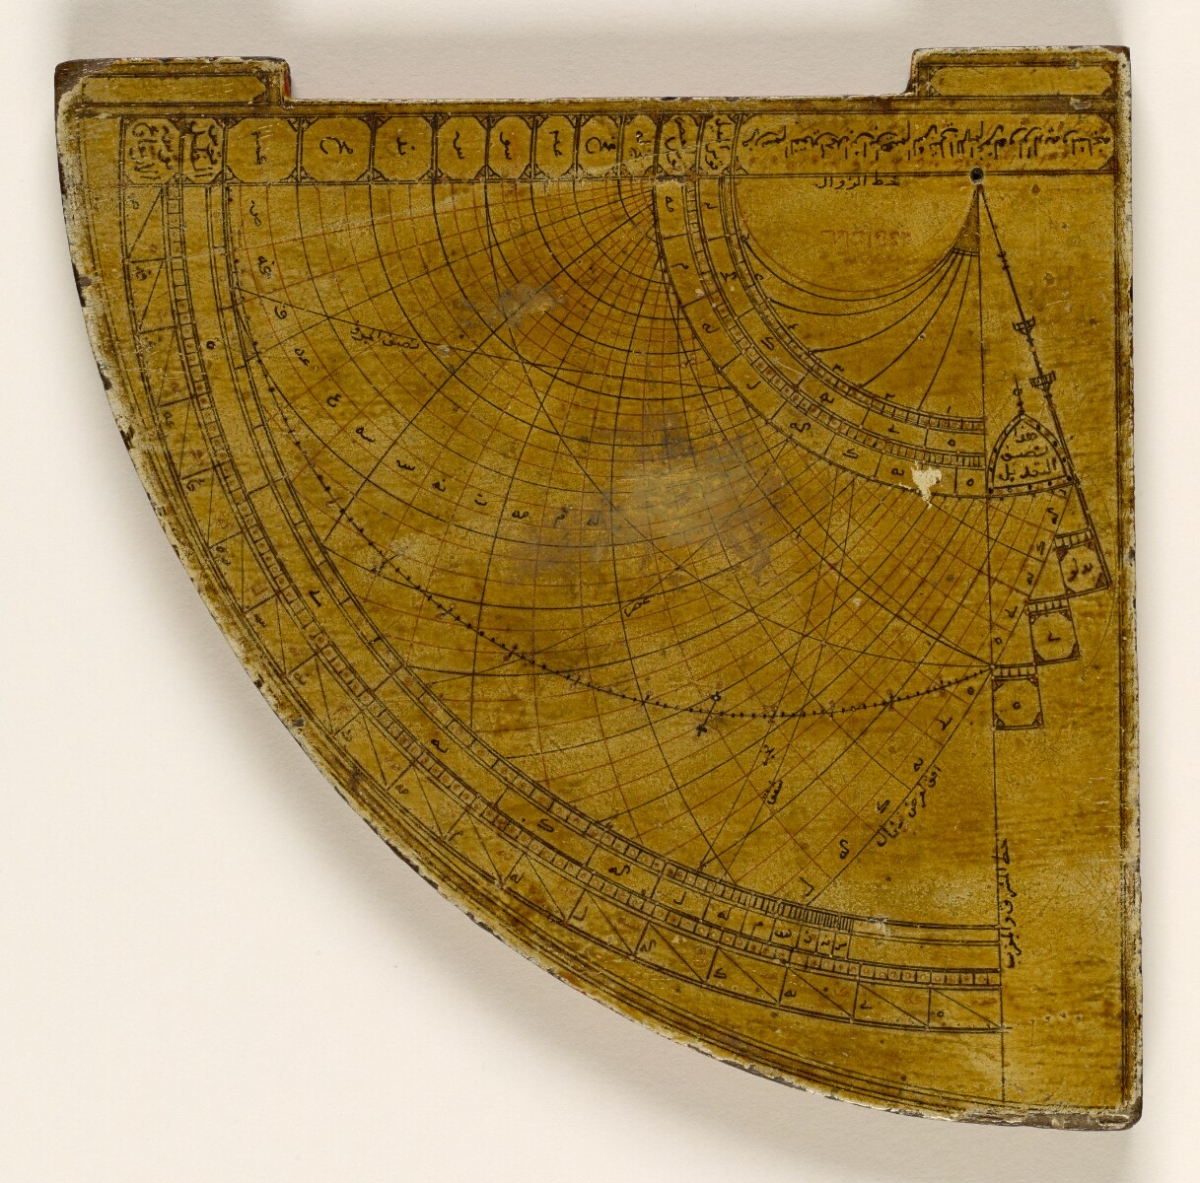 Wooden quadrant inscribed in Arabic and signed by Aḥmad ibn Ibrāhīm al-Sharbatlī in 1840-1841.